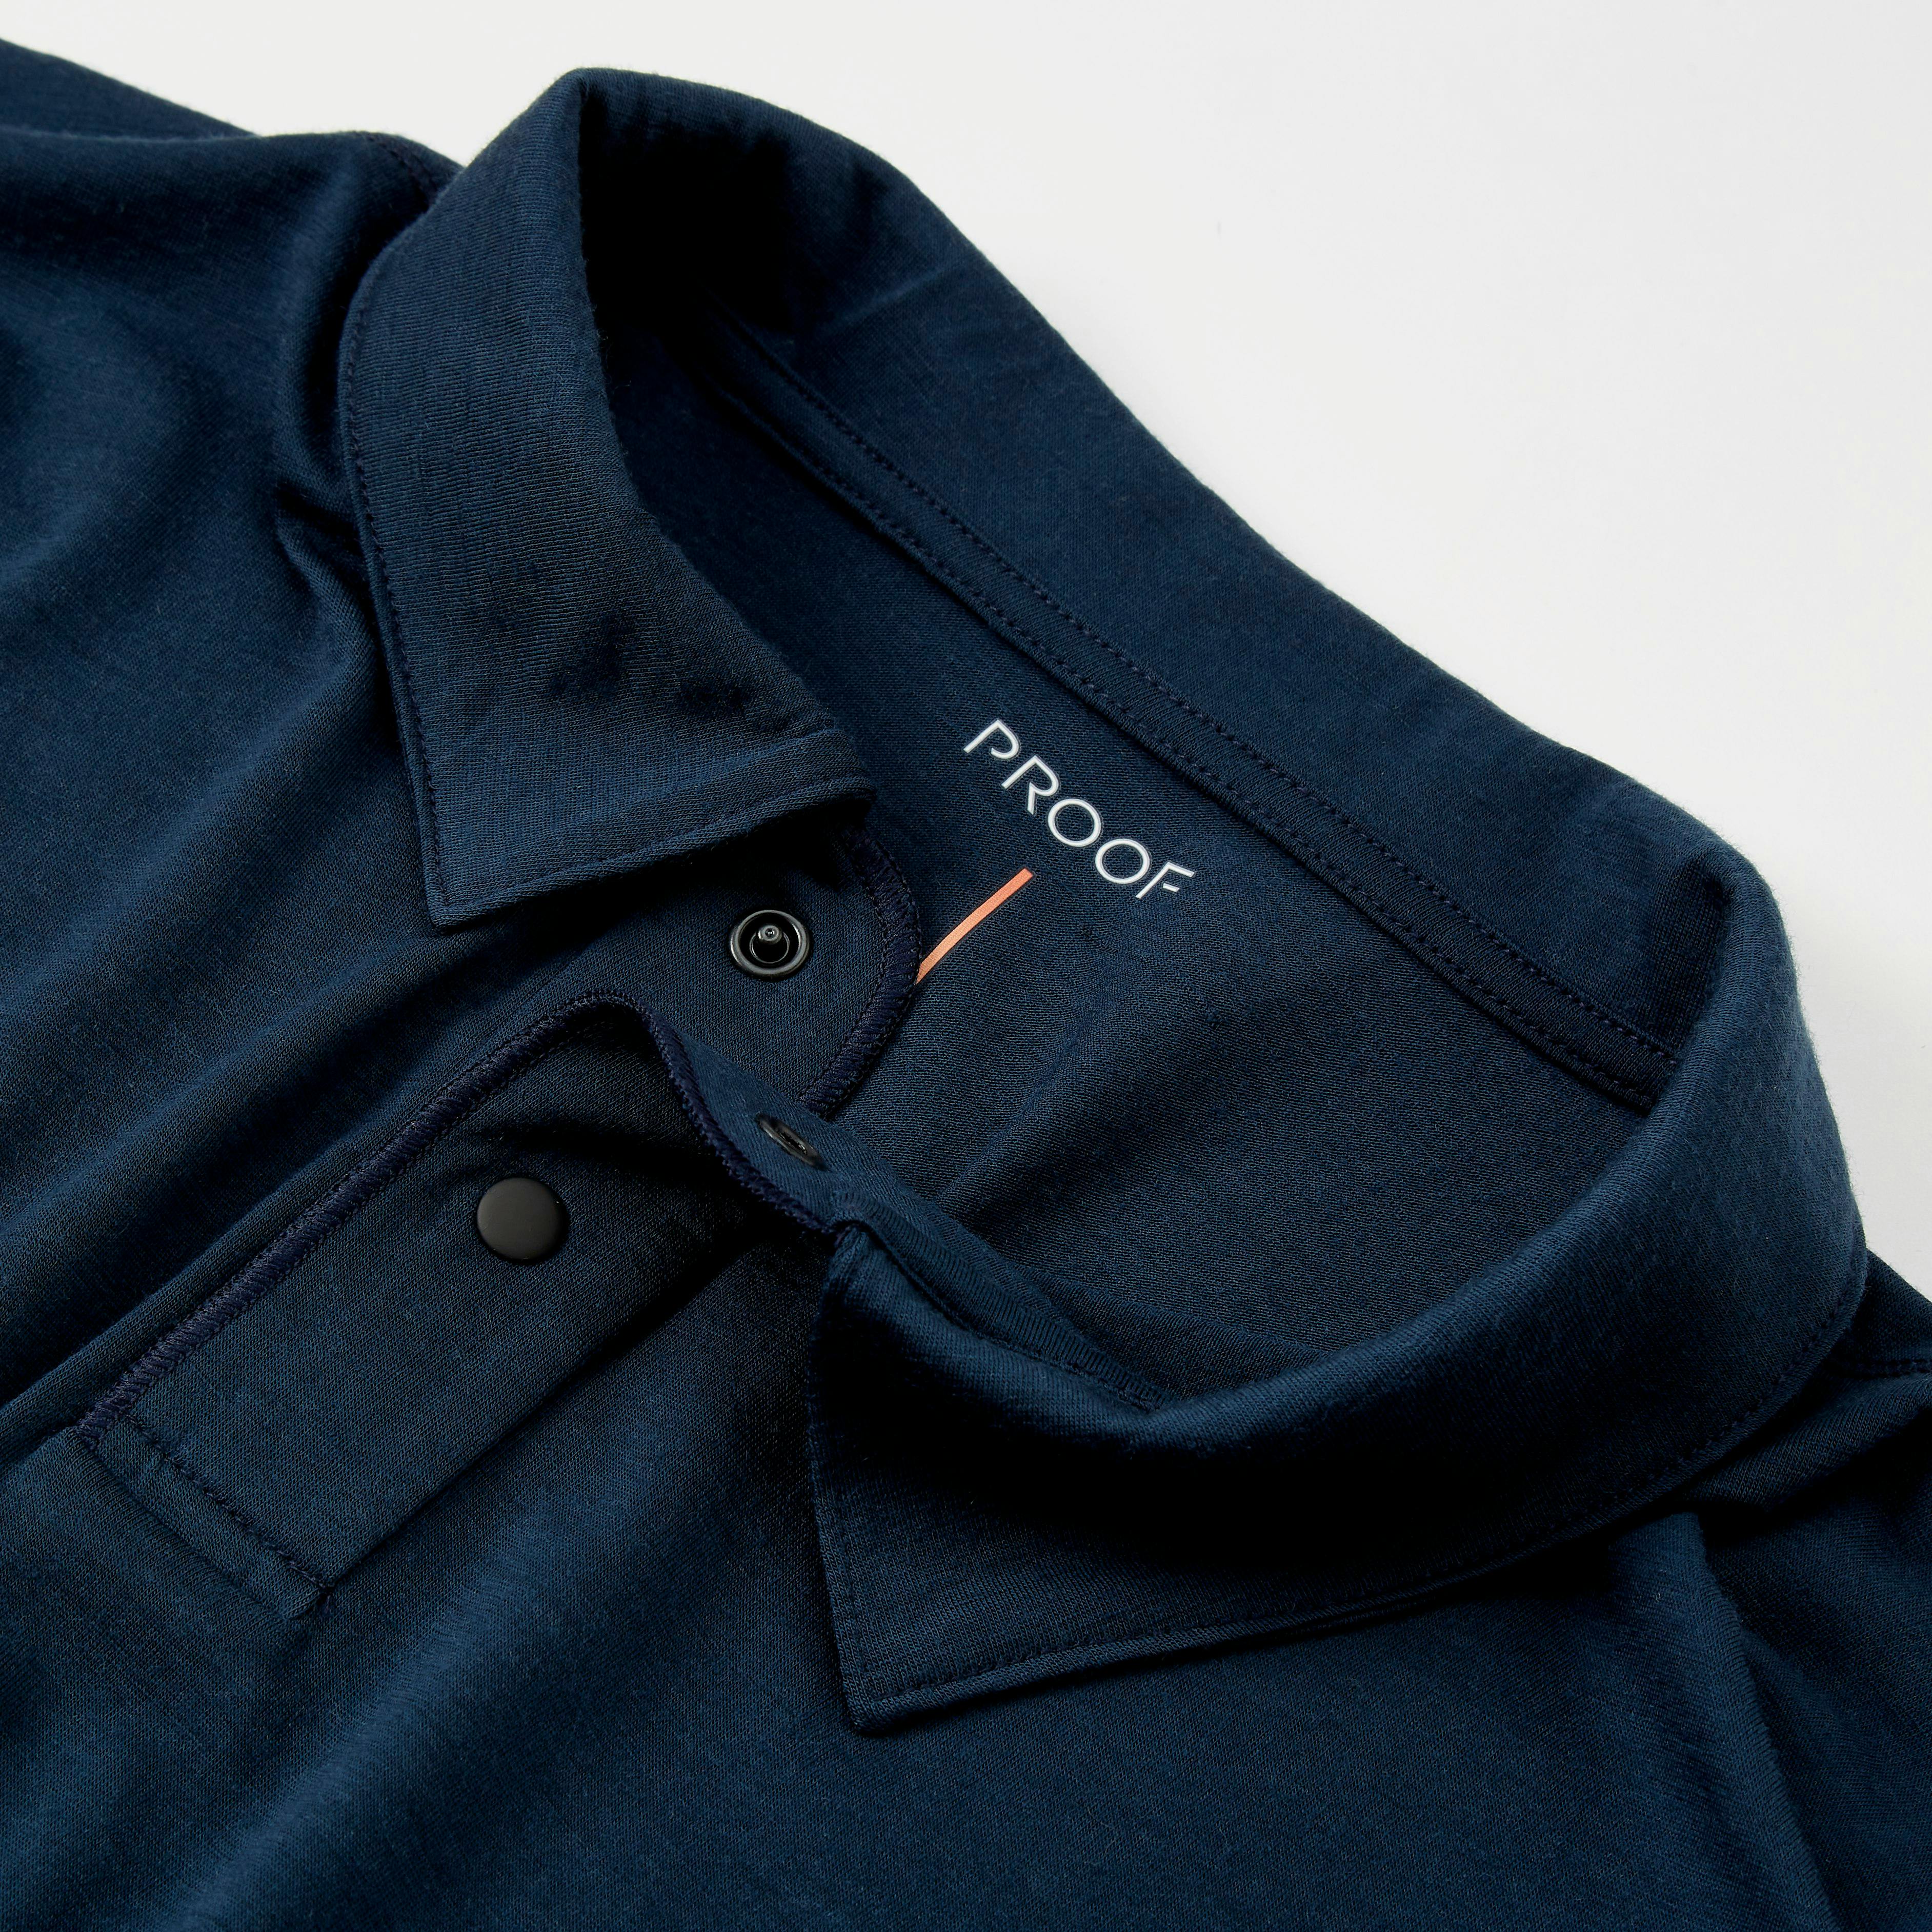 Huckberry Polo Navy Shirts Shirt Proof Merino | | 72-Hour Polo -